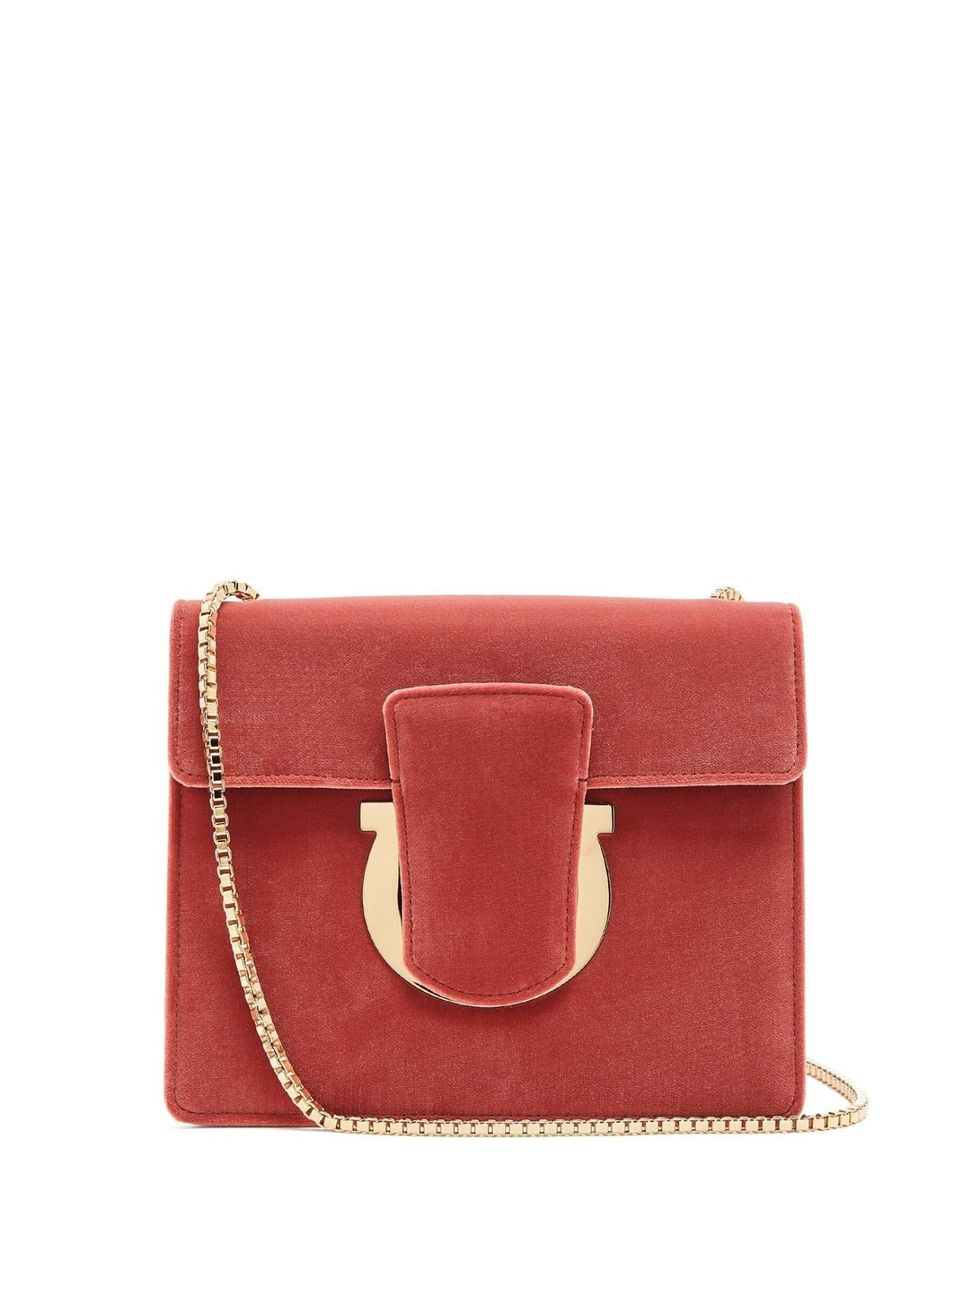 Bag, Leather, Handbag, Red, Fashion accessory, Wallet, Brown, Tan, Maroon, Coin purse, 